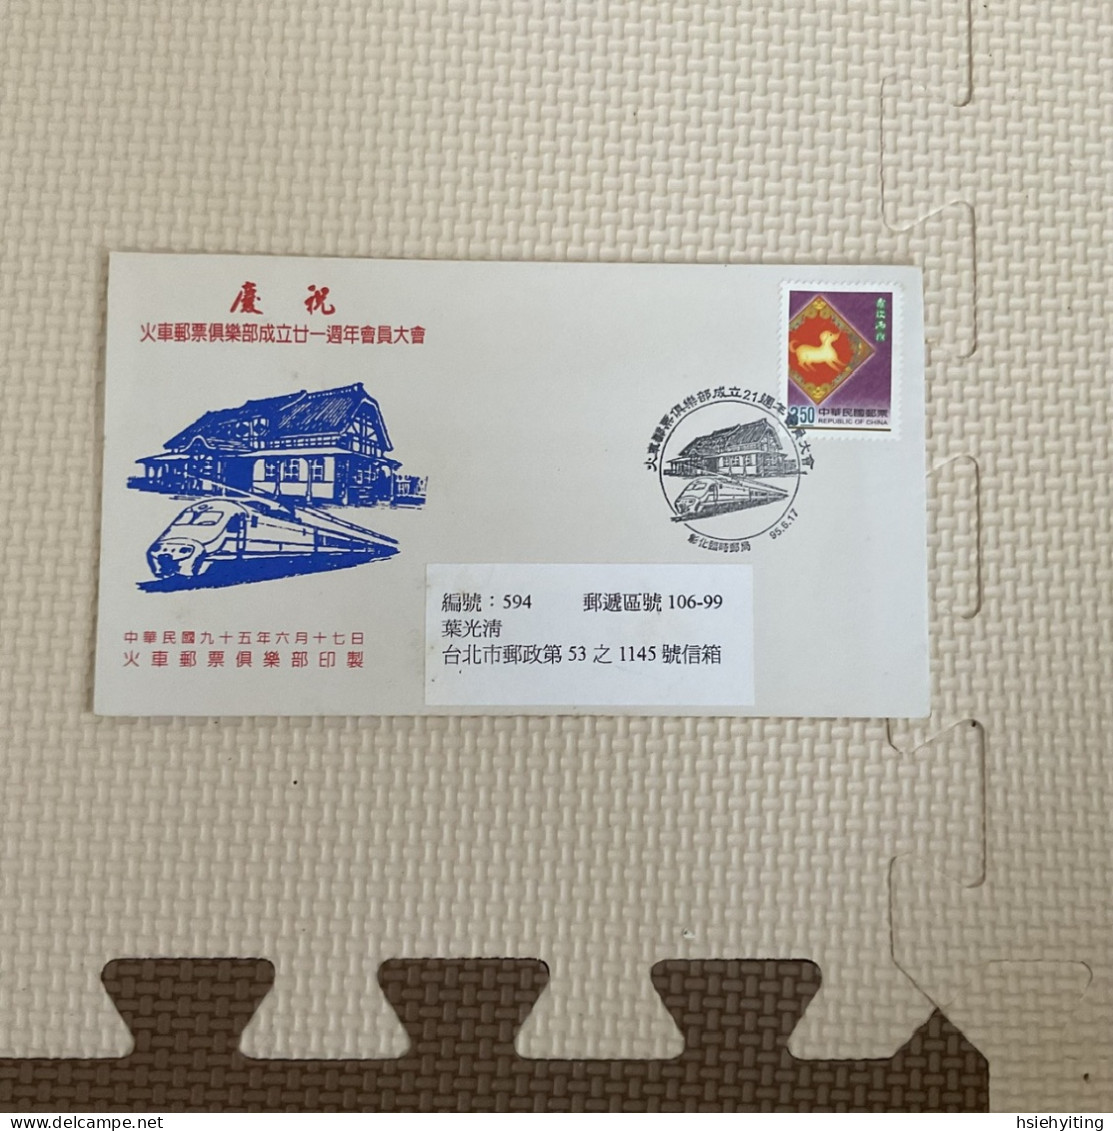 Taiwanese Train Postmarks - Trains